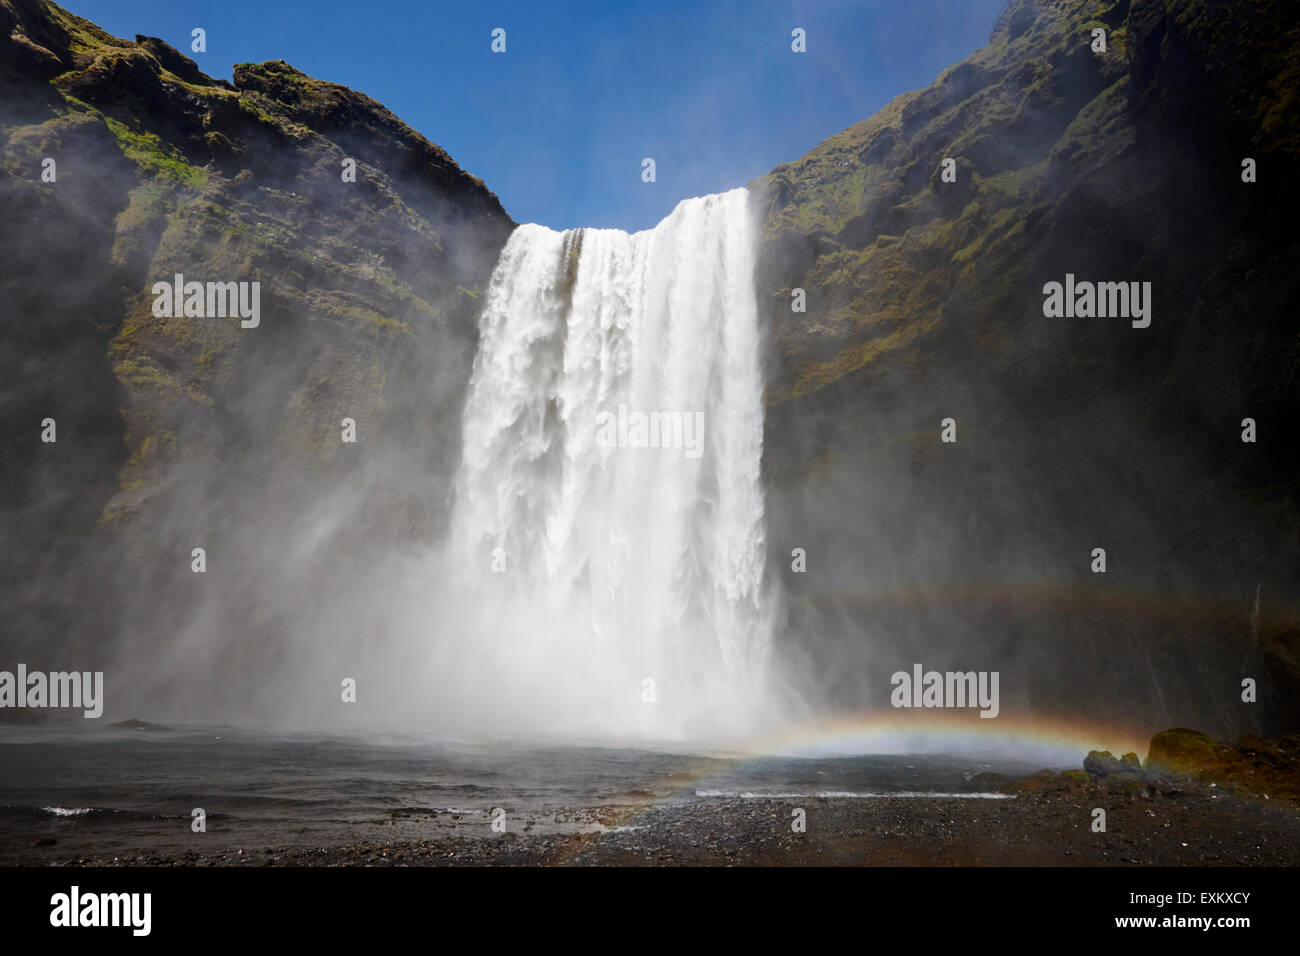 Doppio arcobaleno a cascata skogafoss in Islanda Foto Stock